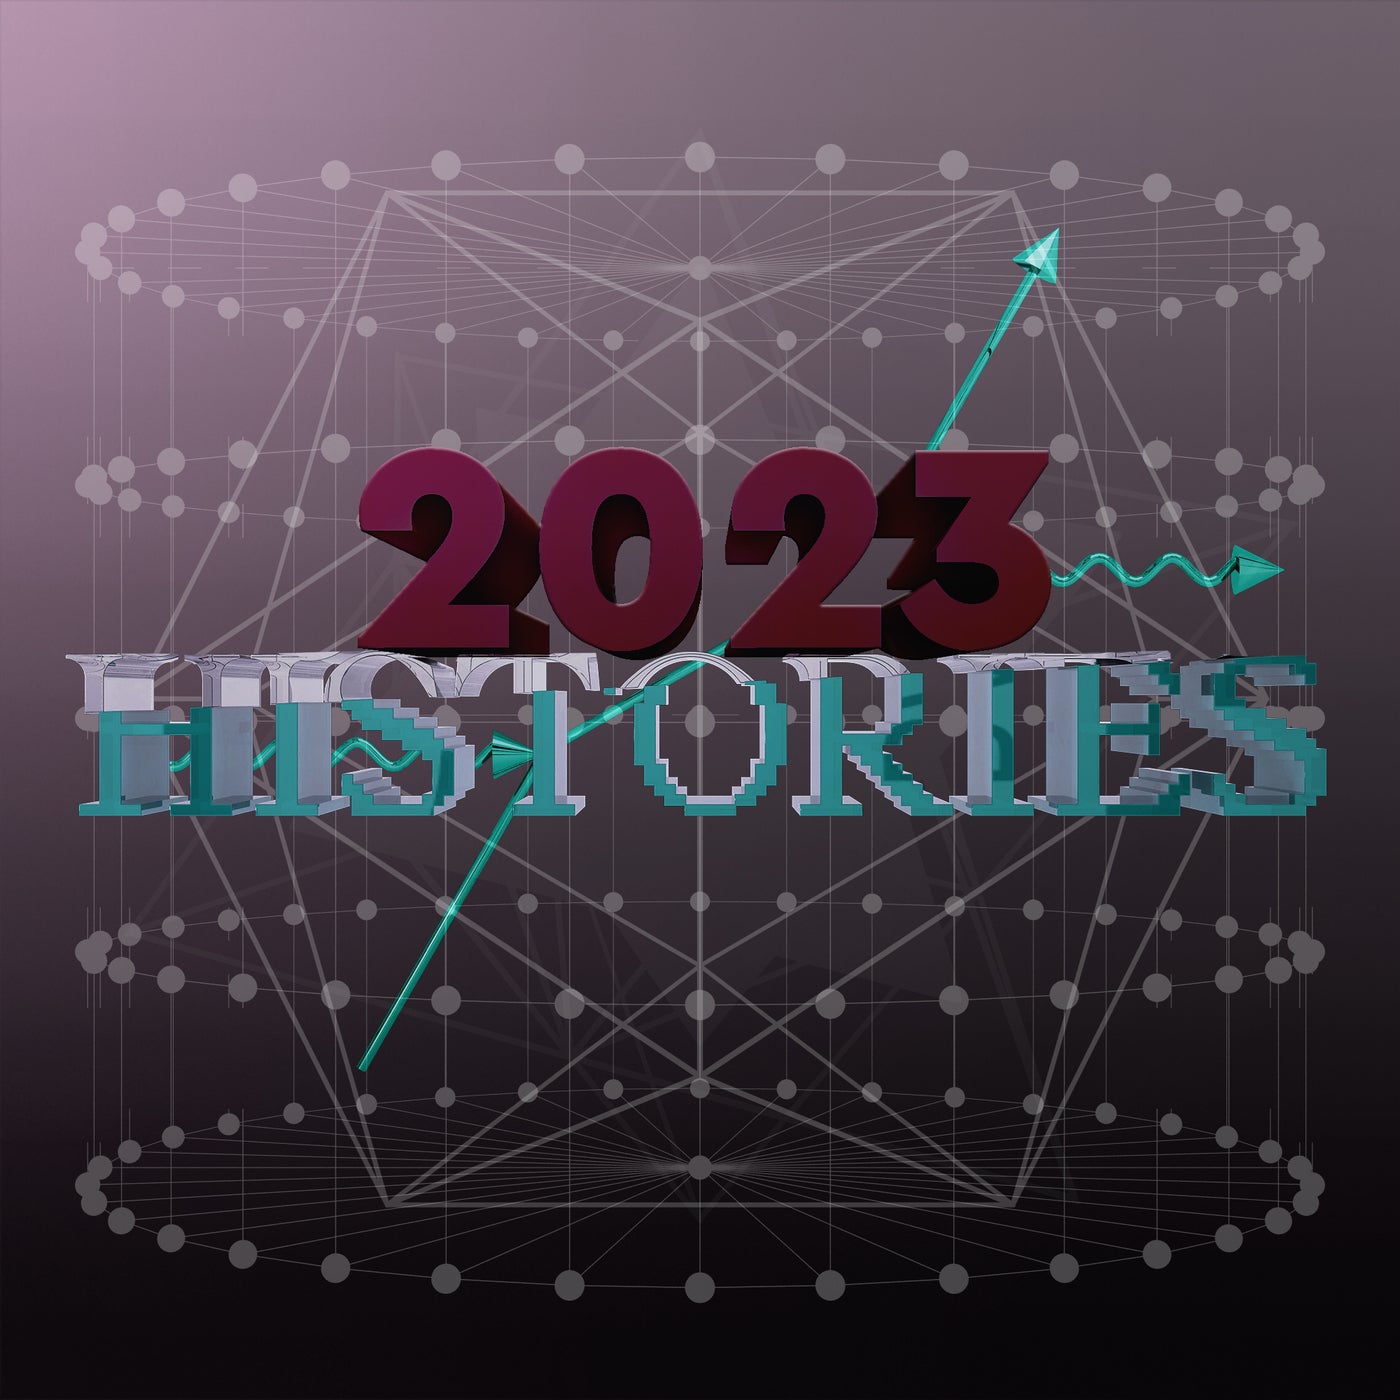 2023 Histories